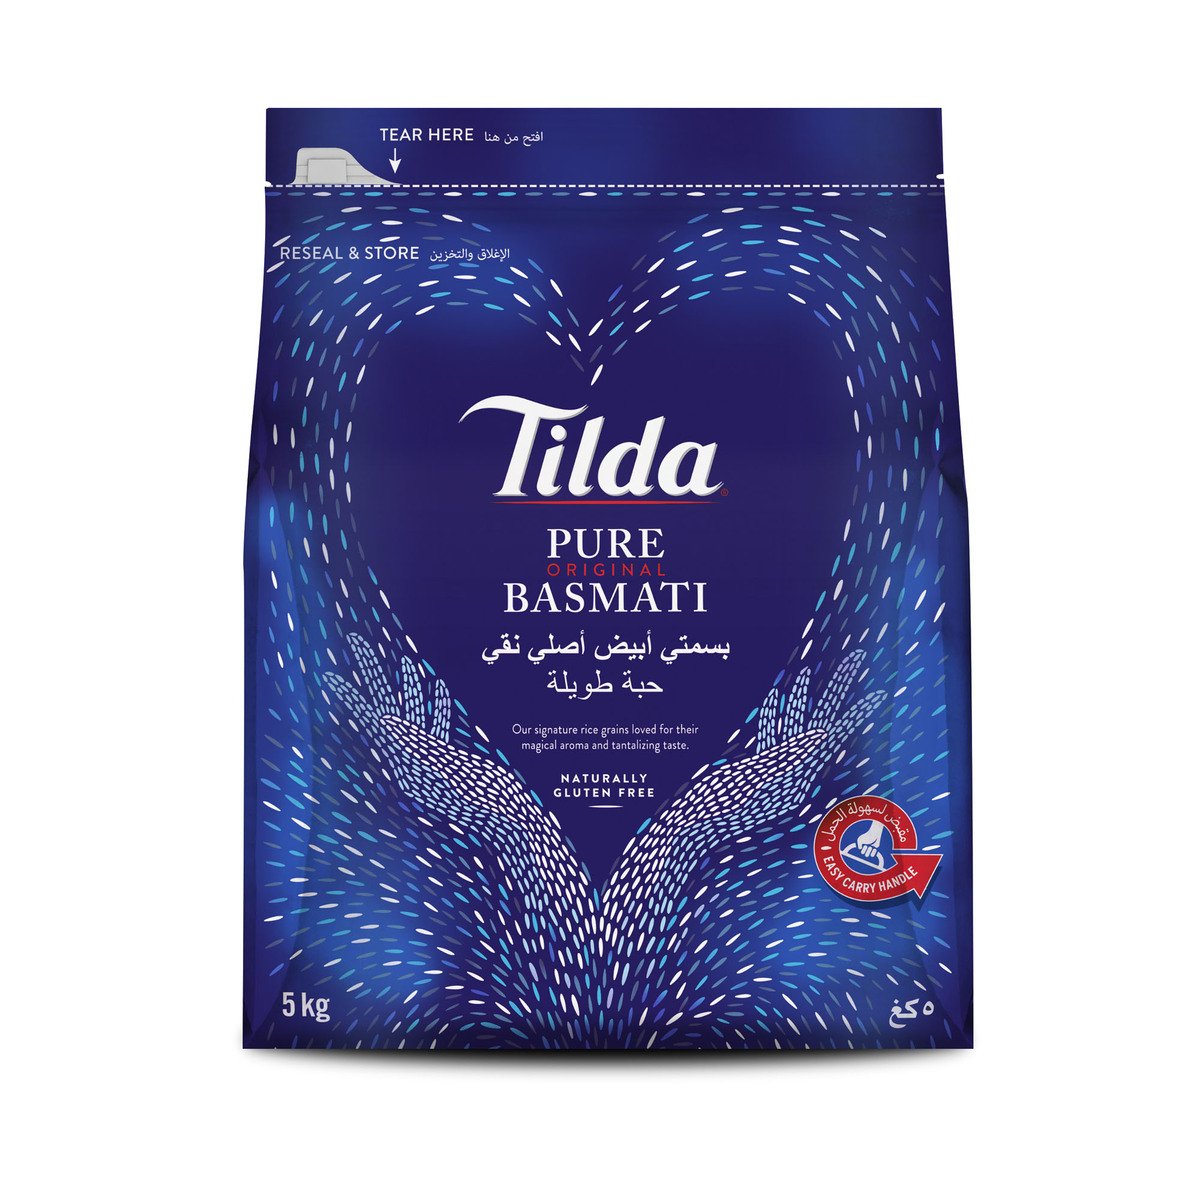 Tilda Pure Original Basmati Rice 5 kg